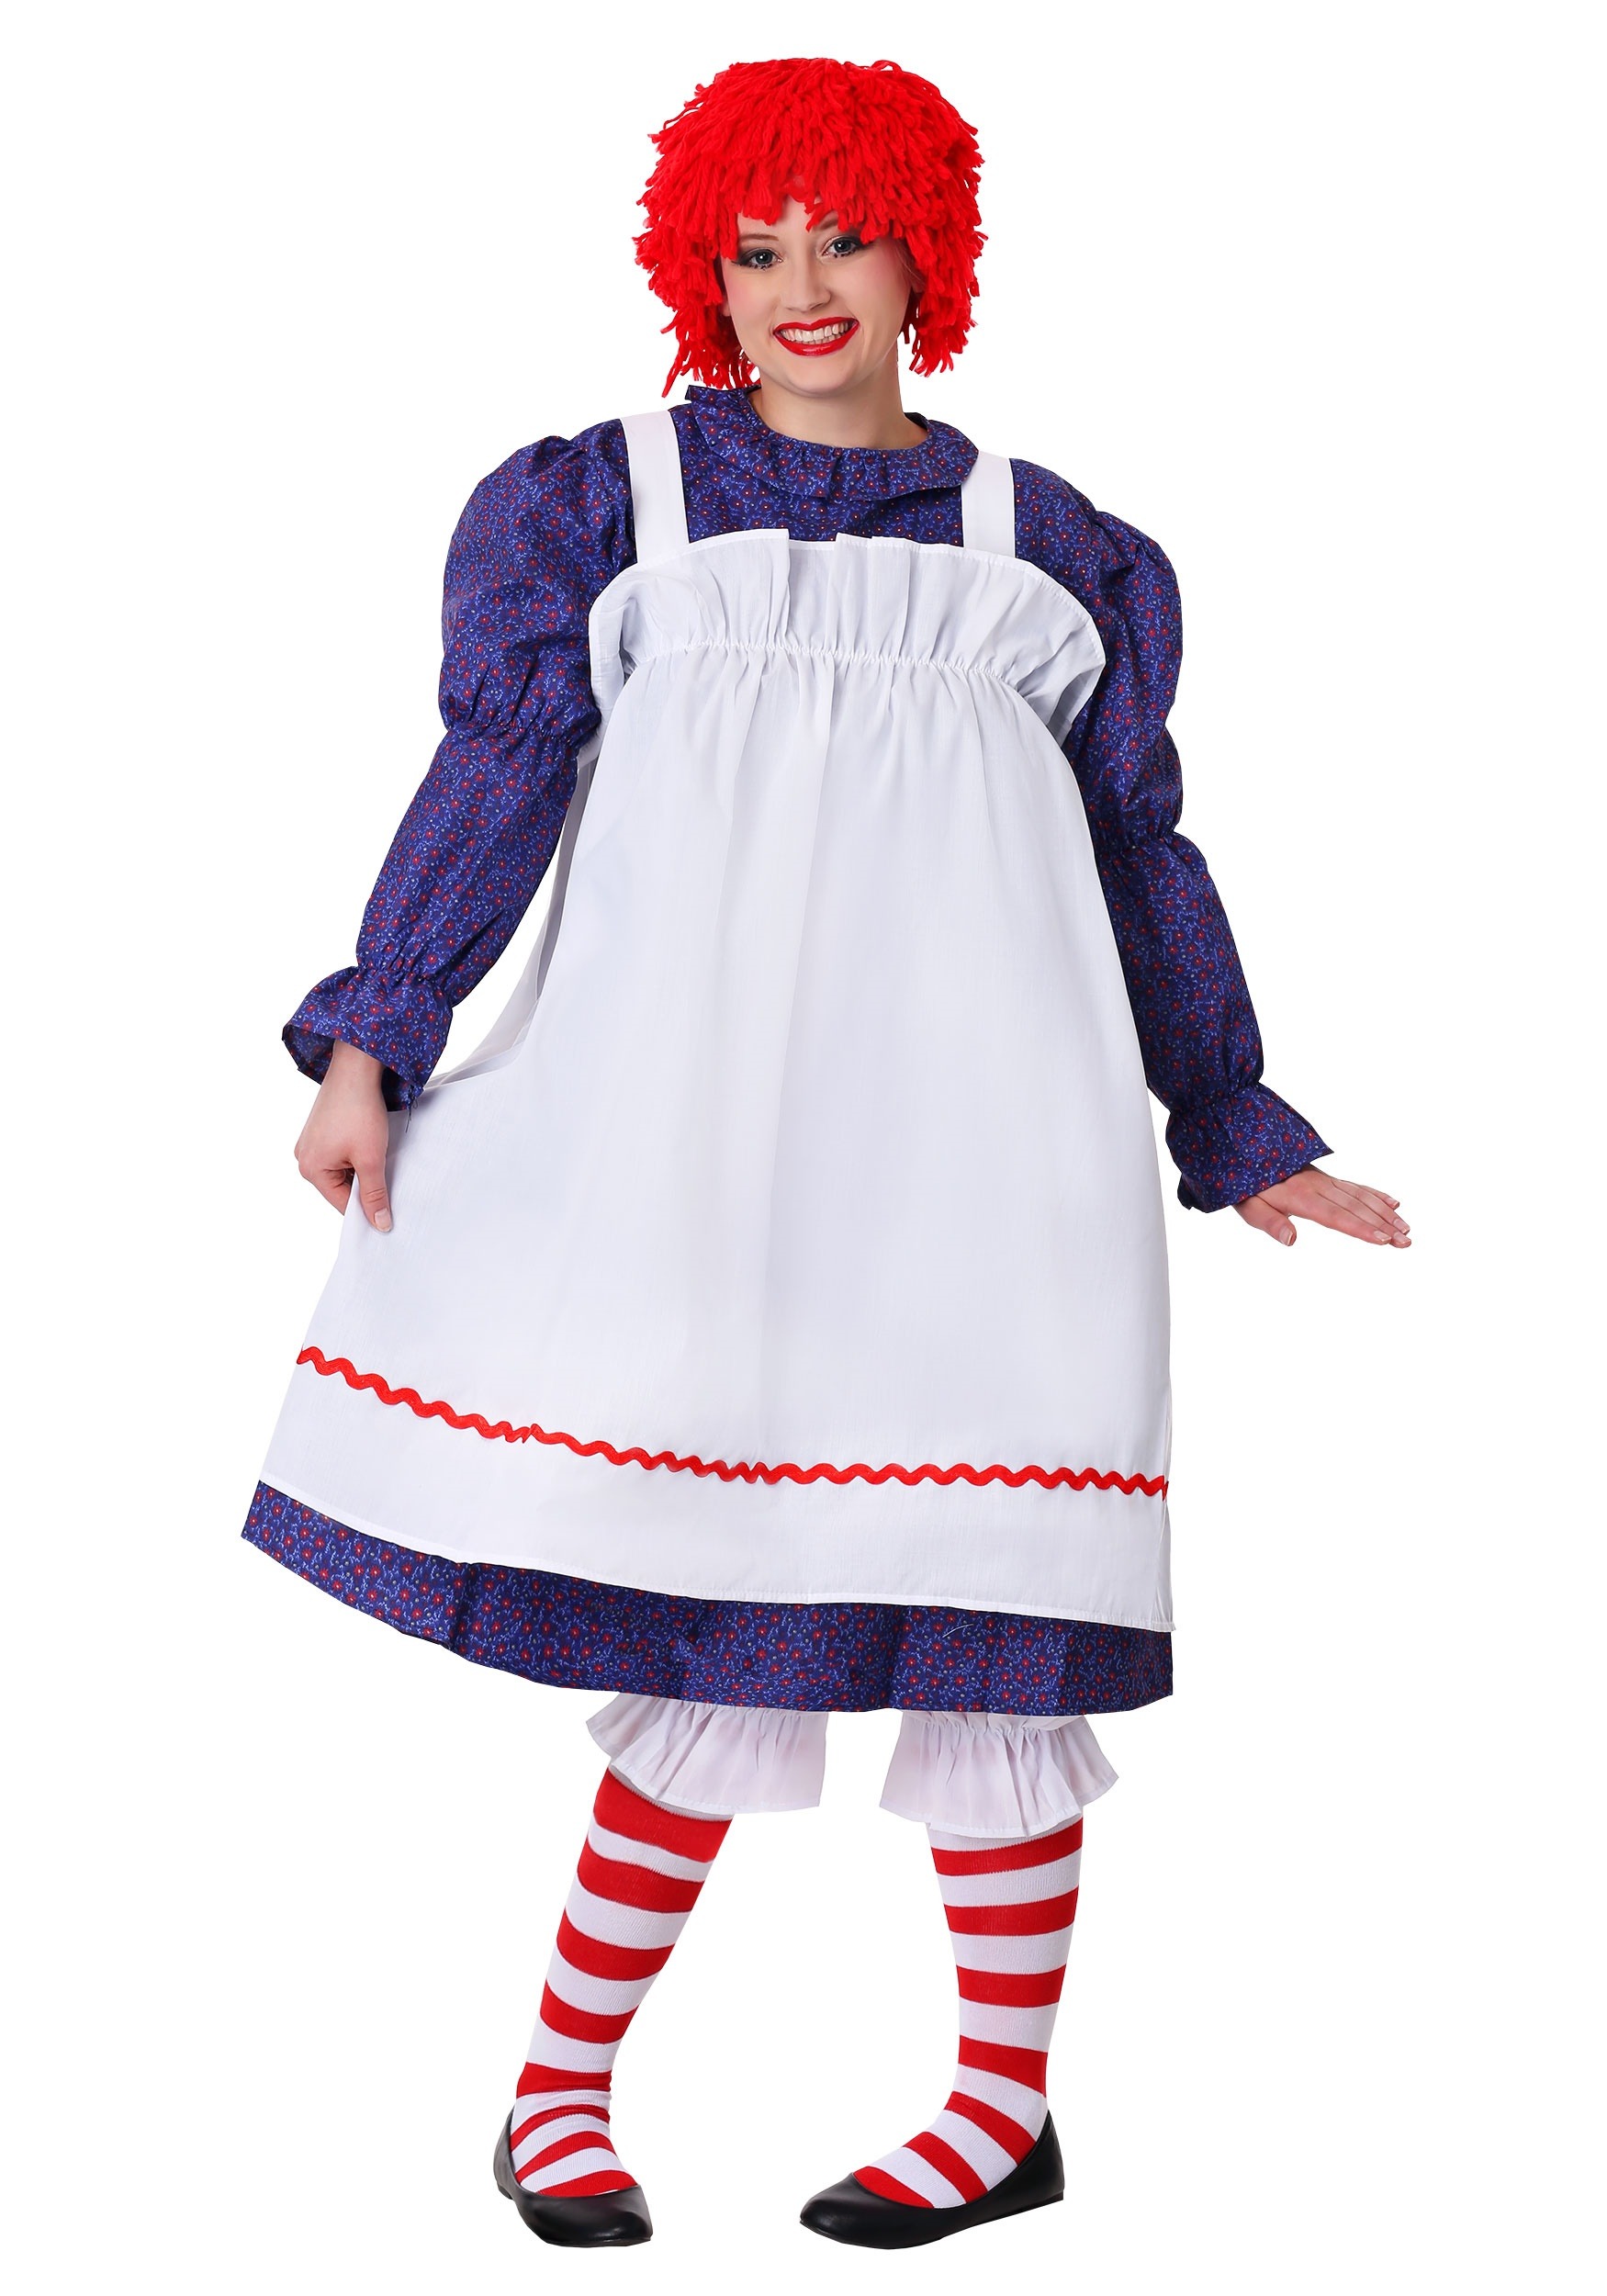 Photos - Fancy Dress Classic FUN Costumes Women's Plus Size Rag Doll Costume Blue/Red/White FUN 